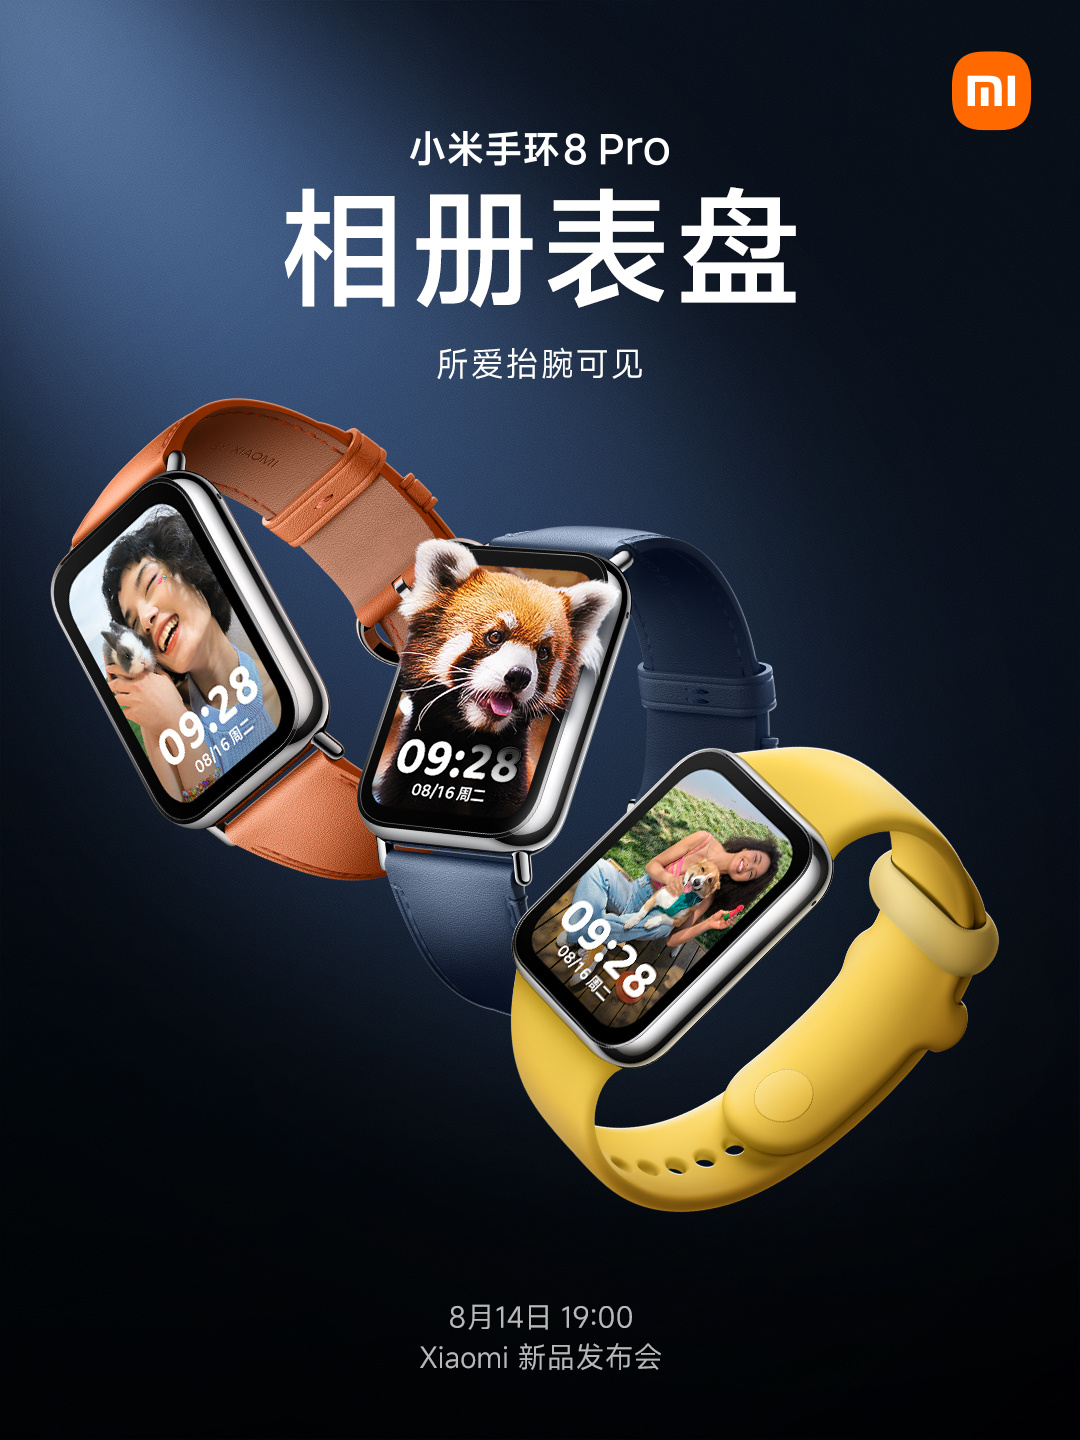 Xiaomi Smart Band 8 Pro wallpapers